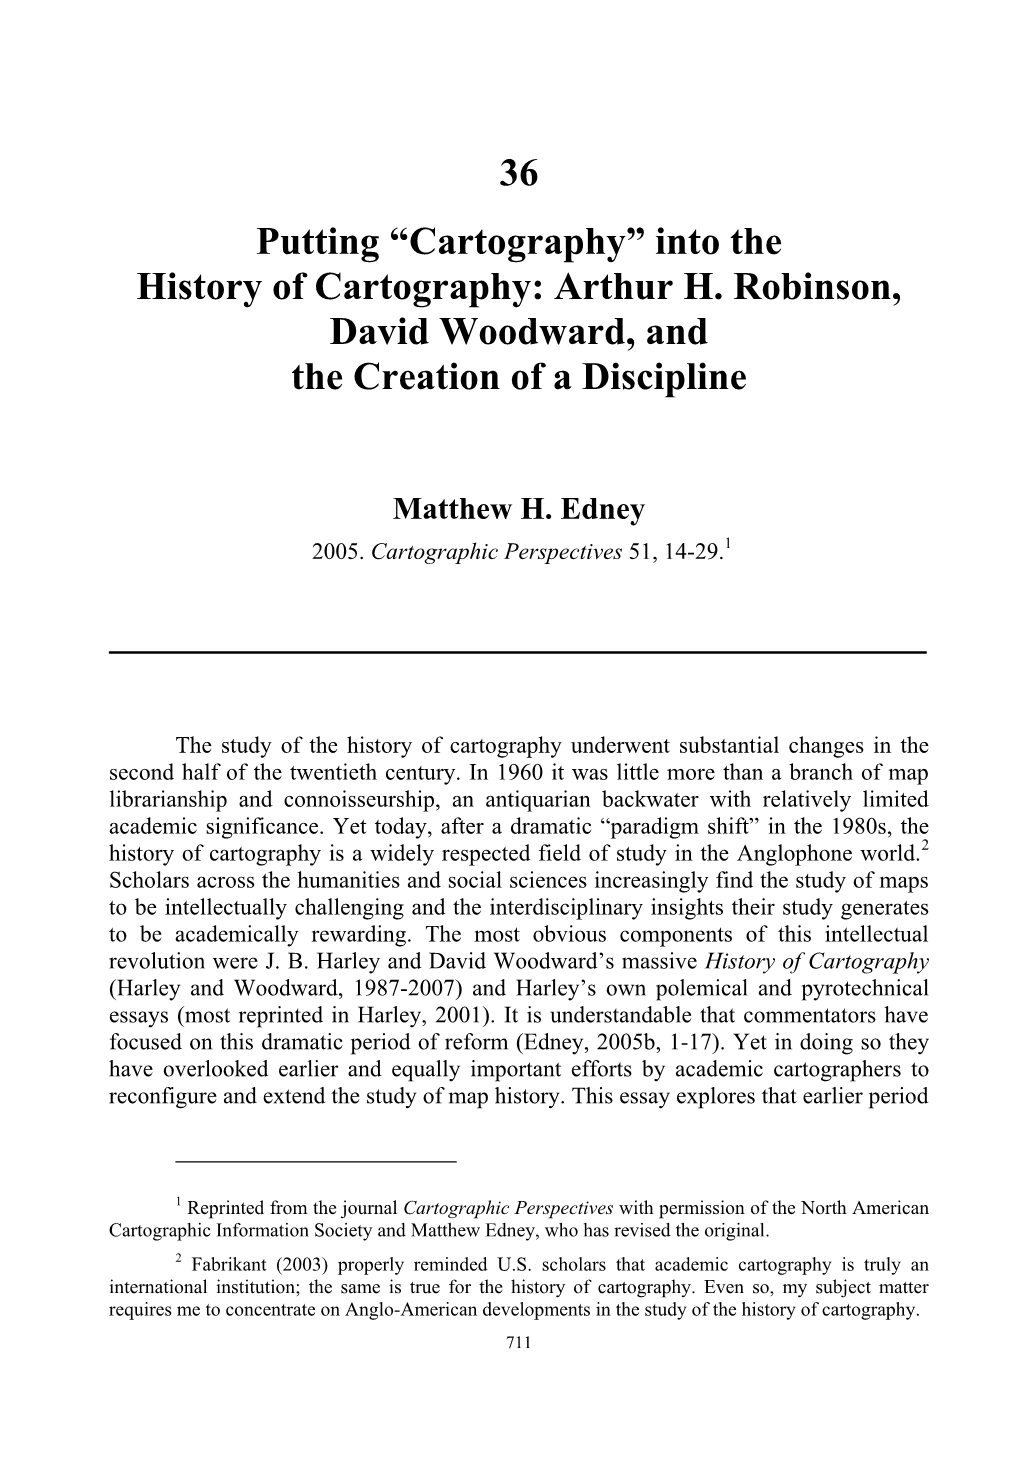 Cartography” Into the History of Cartography: Arthur H